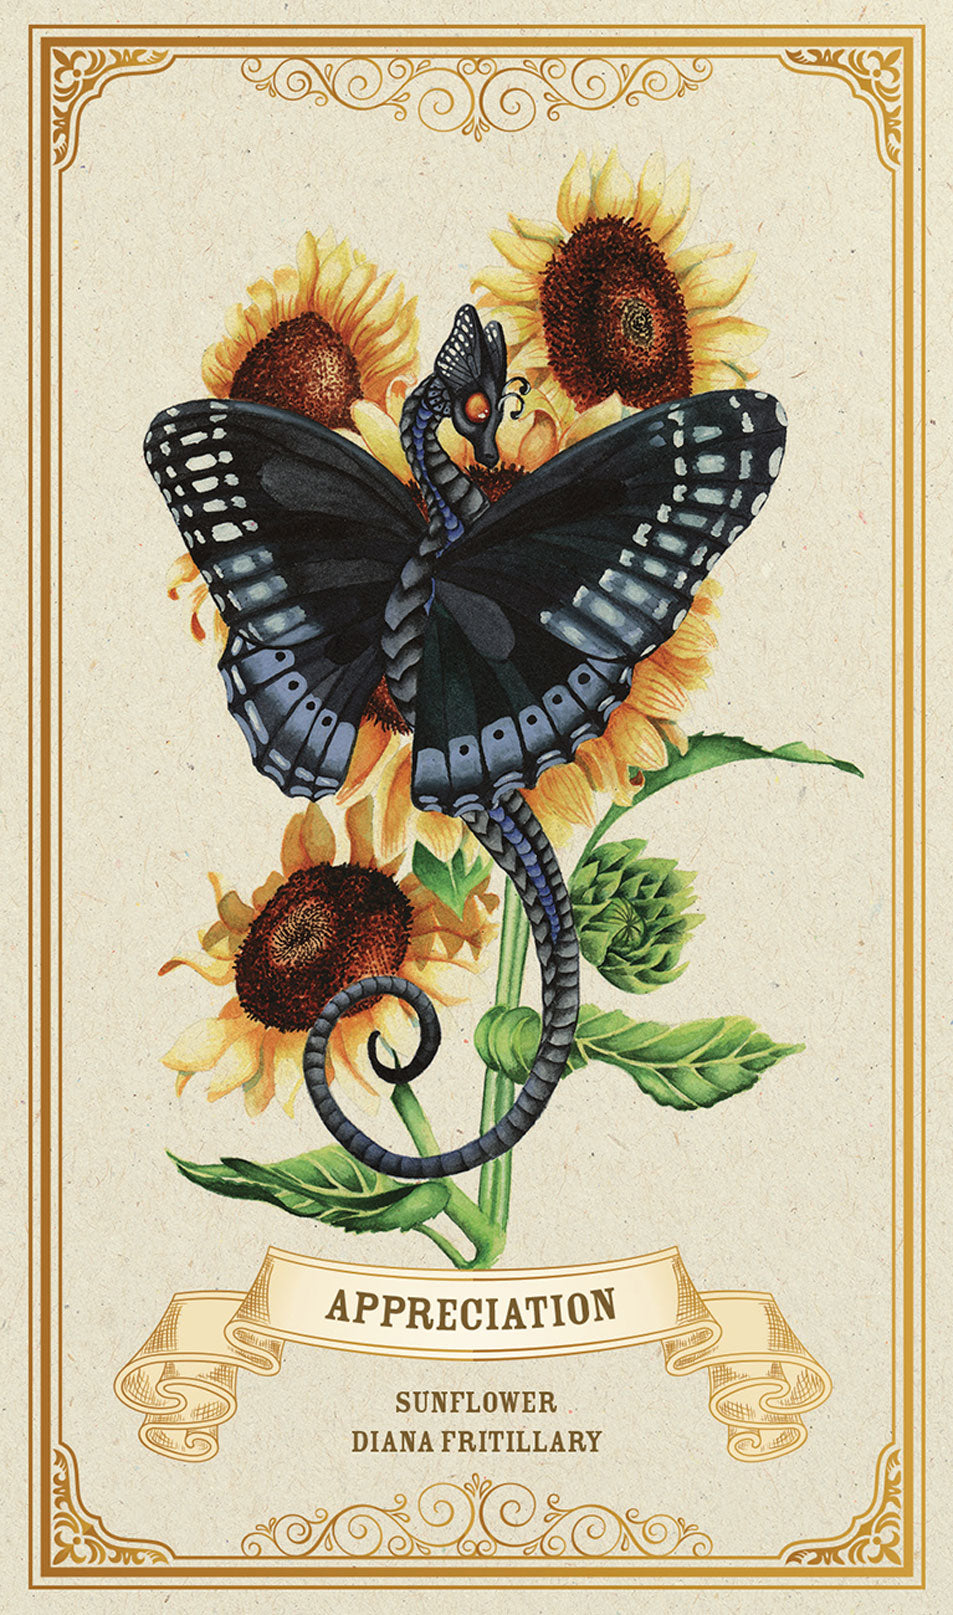 Appreciation (Sunflower, Diana Fritillary) card